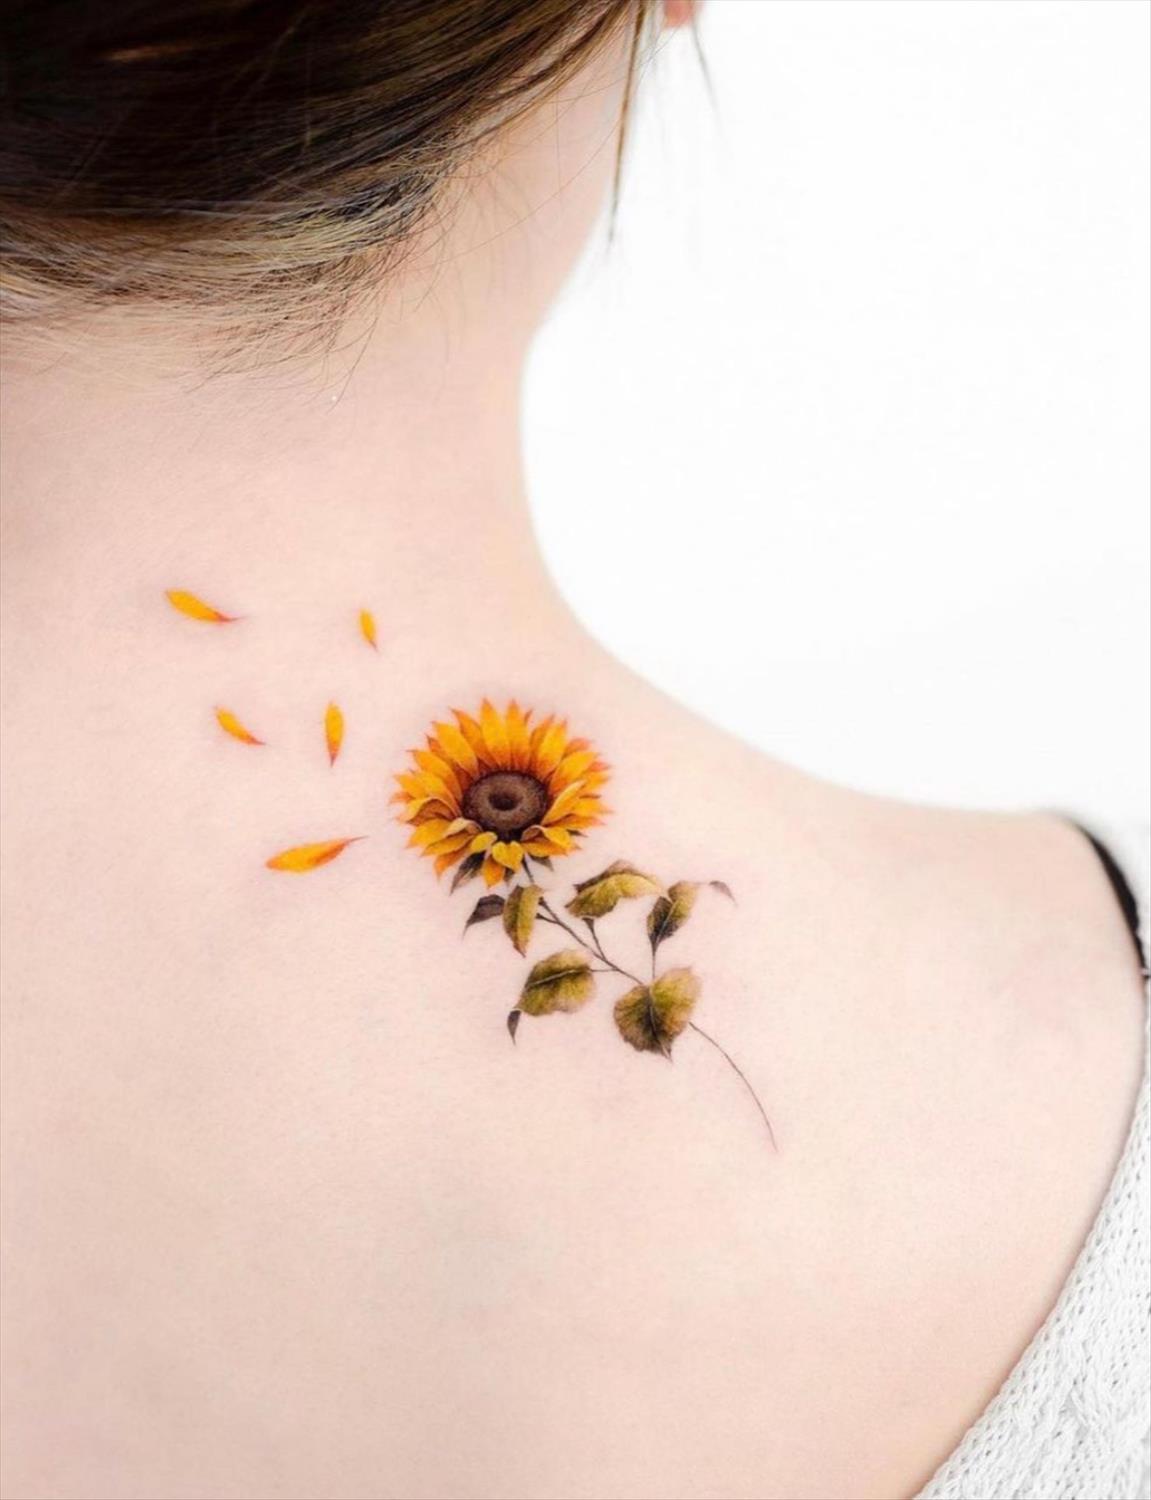 18 Amazing Sunflower Tattoo Ideas to Celebrate the Beauty of Nature